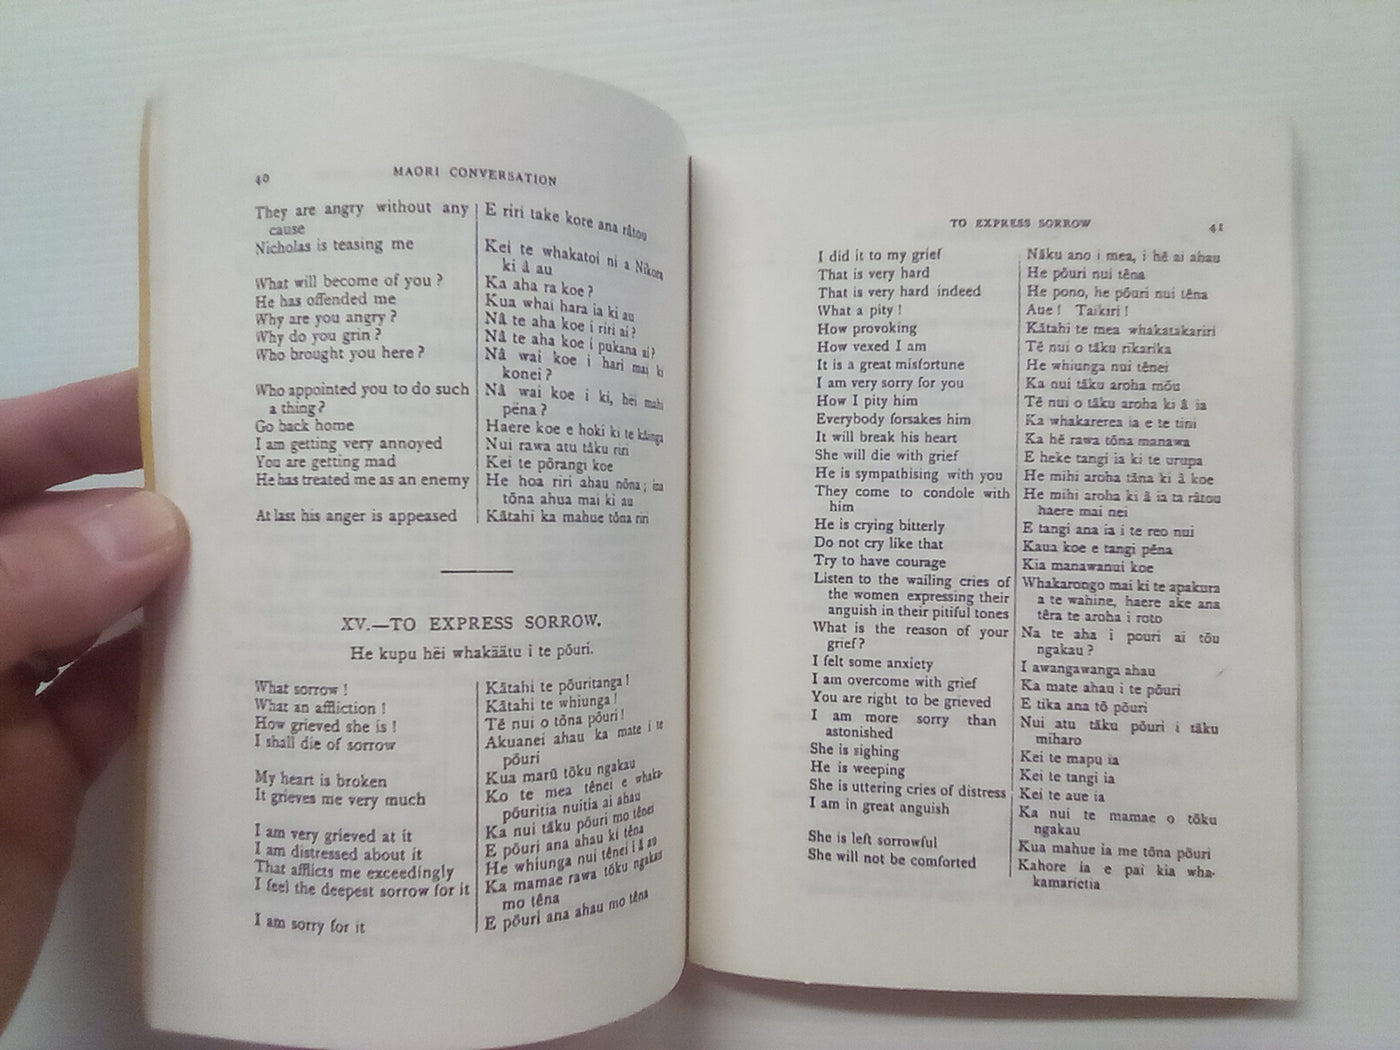 Complete Manual of Māori Grammar & Conversation by Apirana Ngata